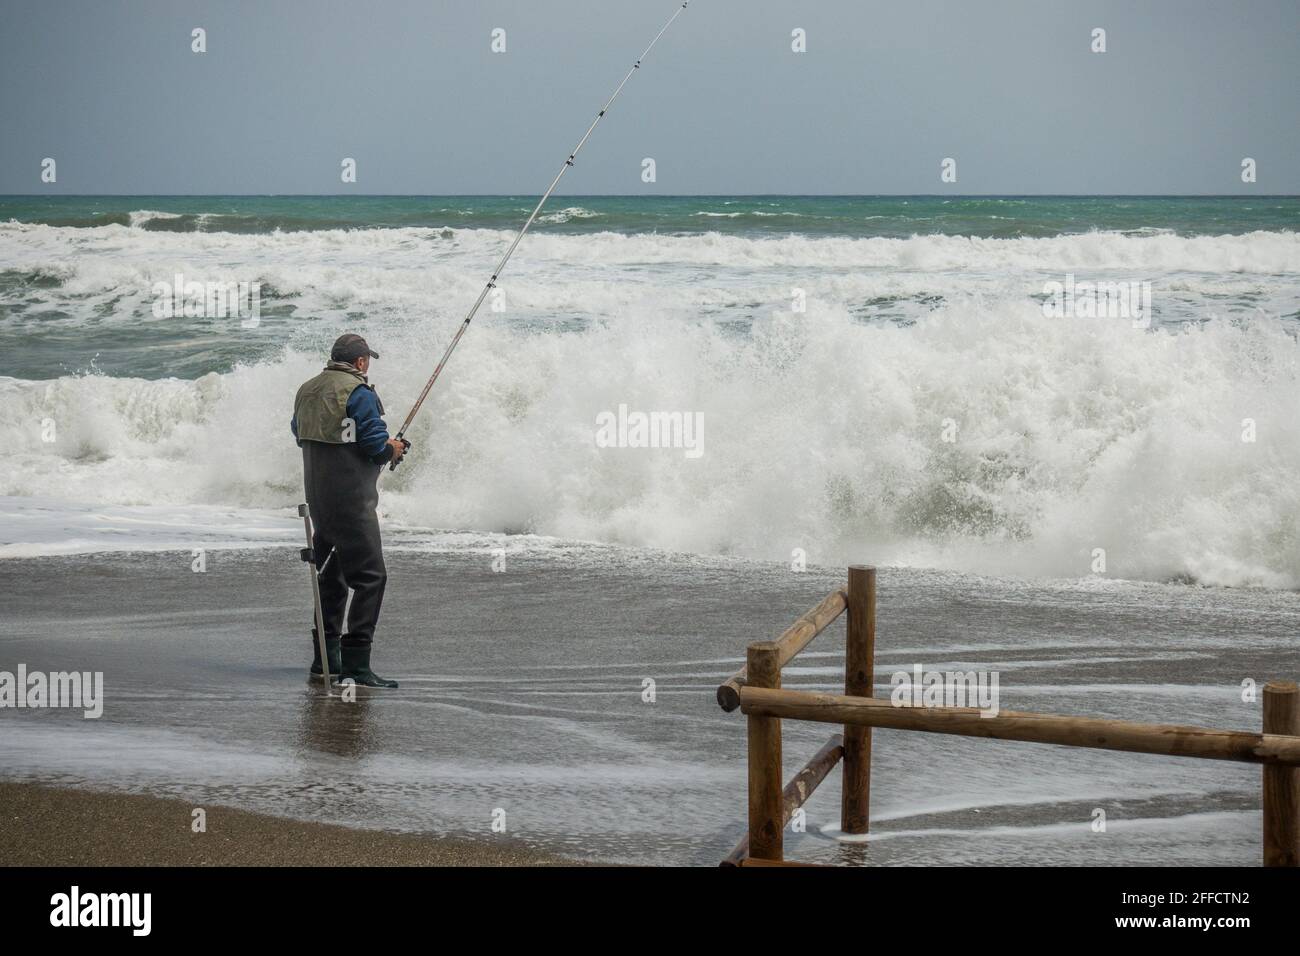 Angler at sea, during rough sea, Spain. Stock Photo